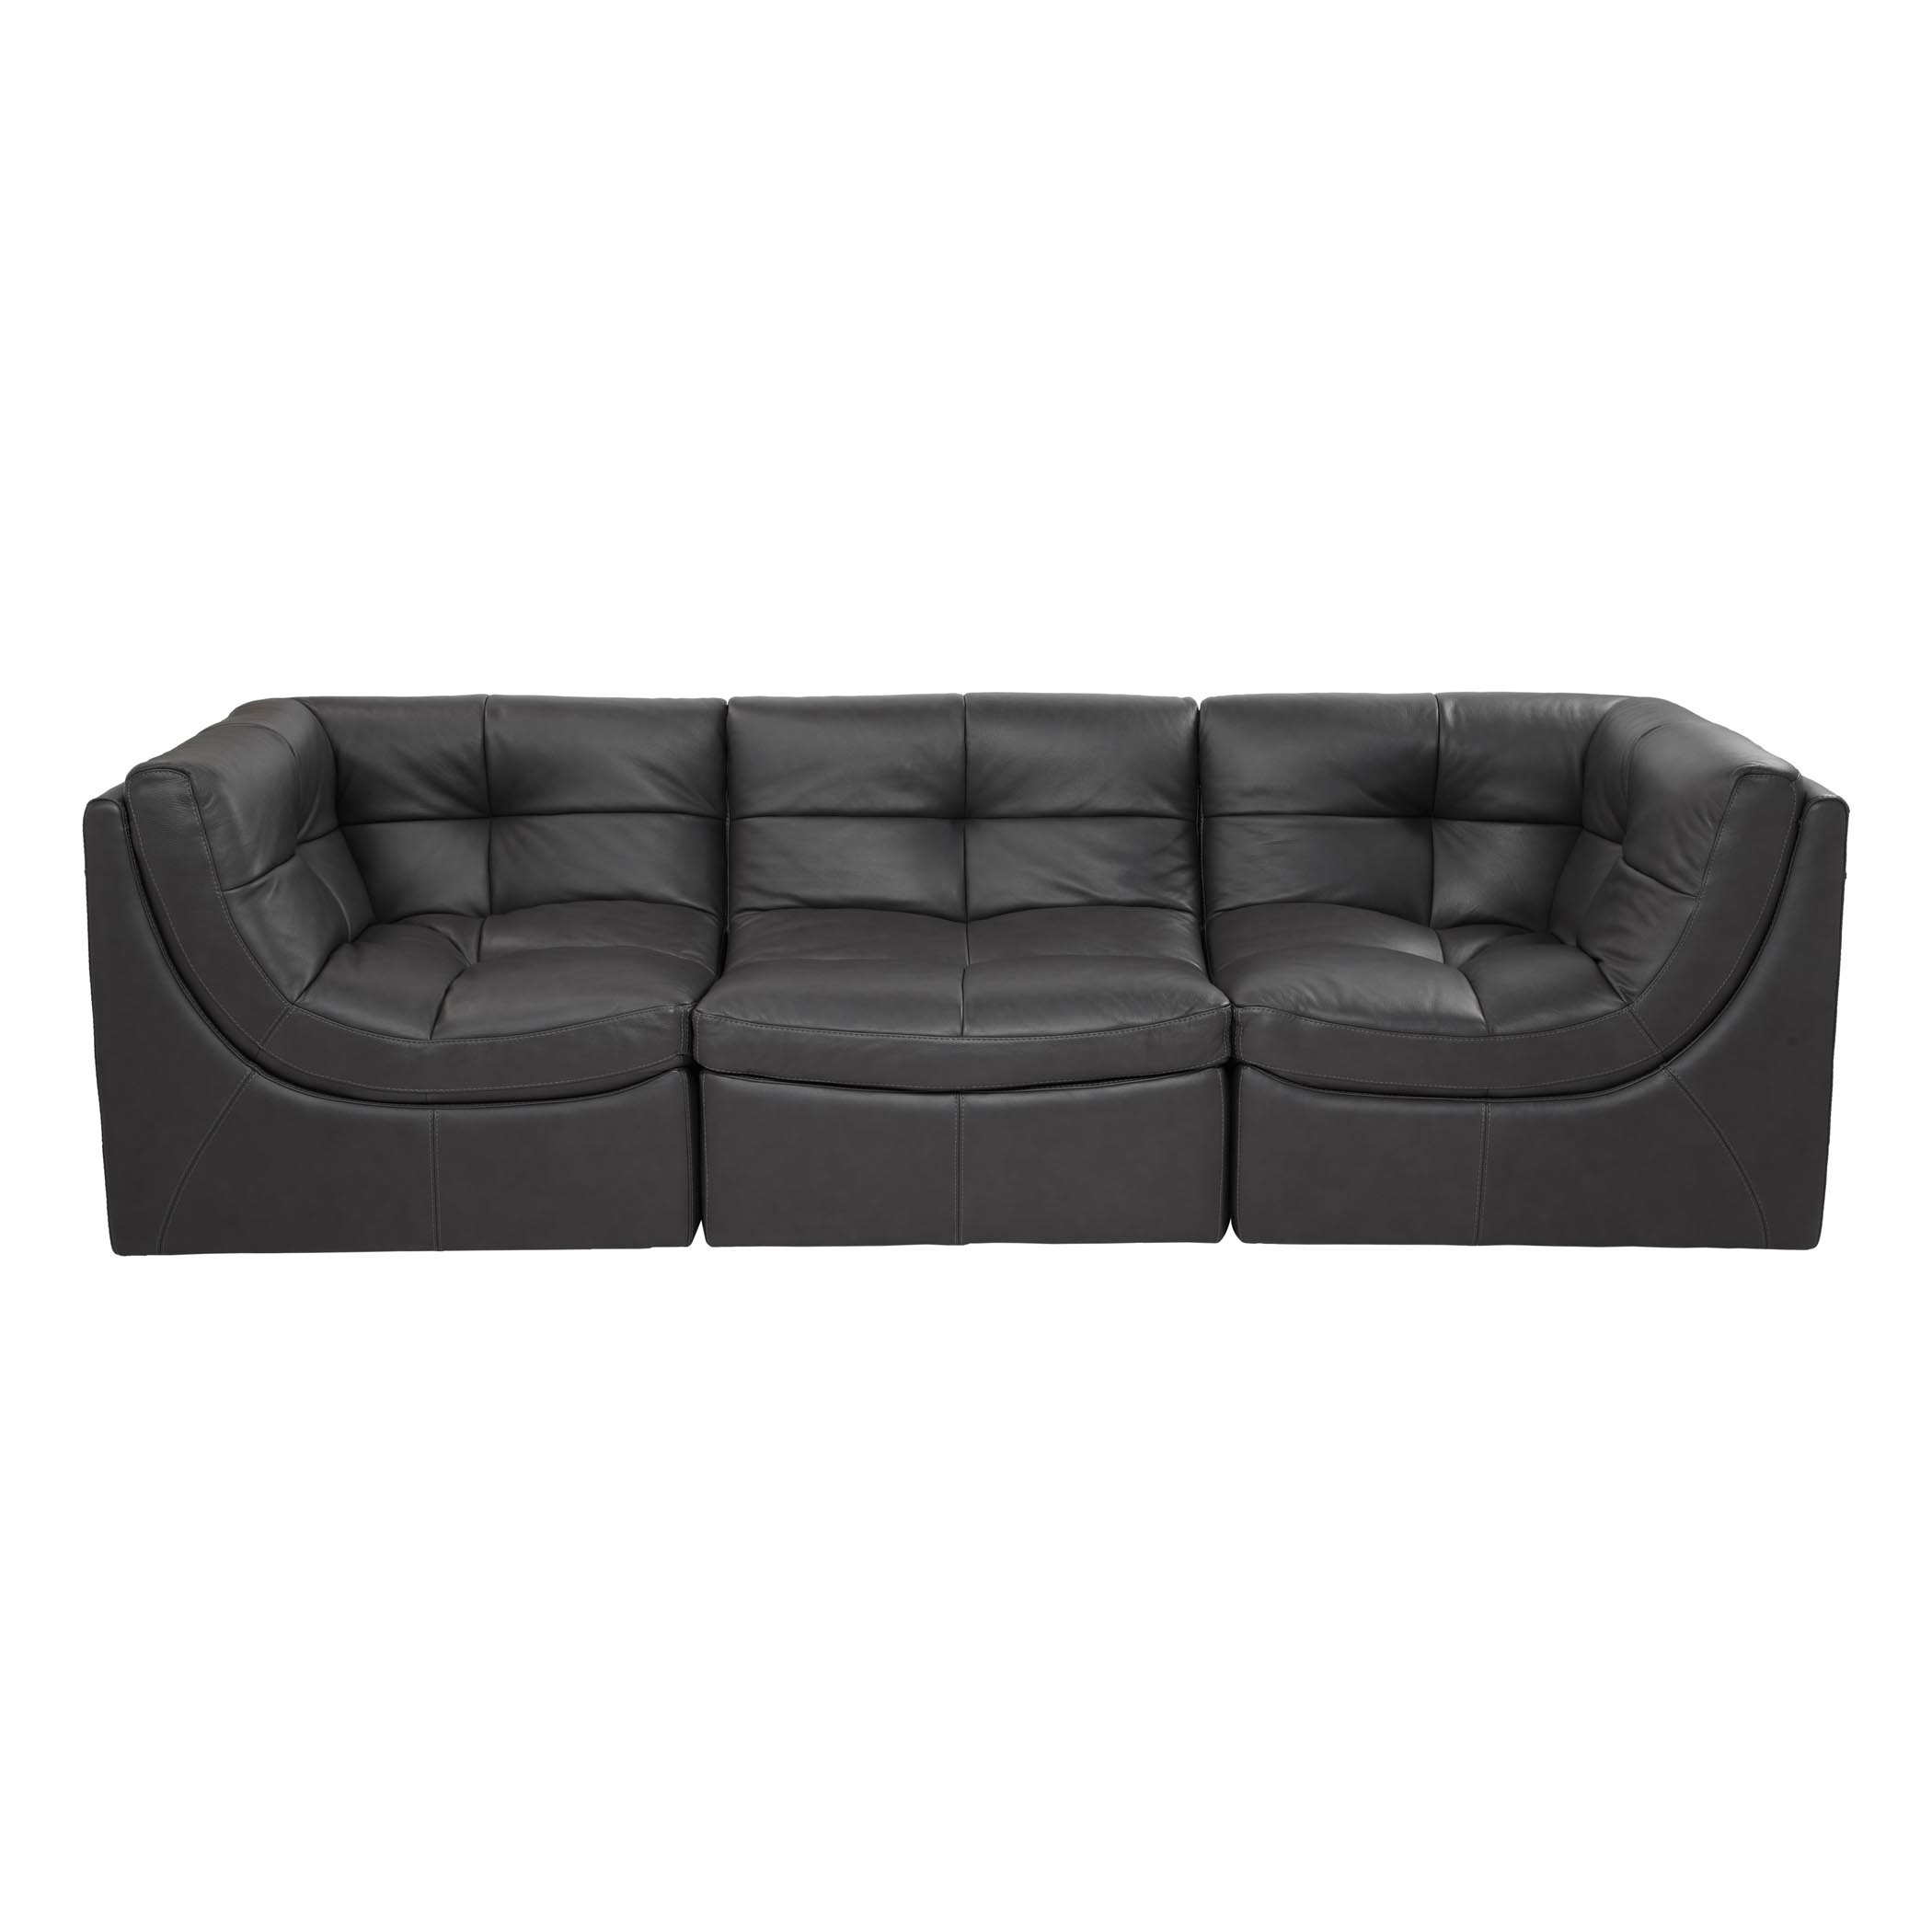 3-pc sofa